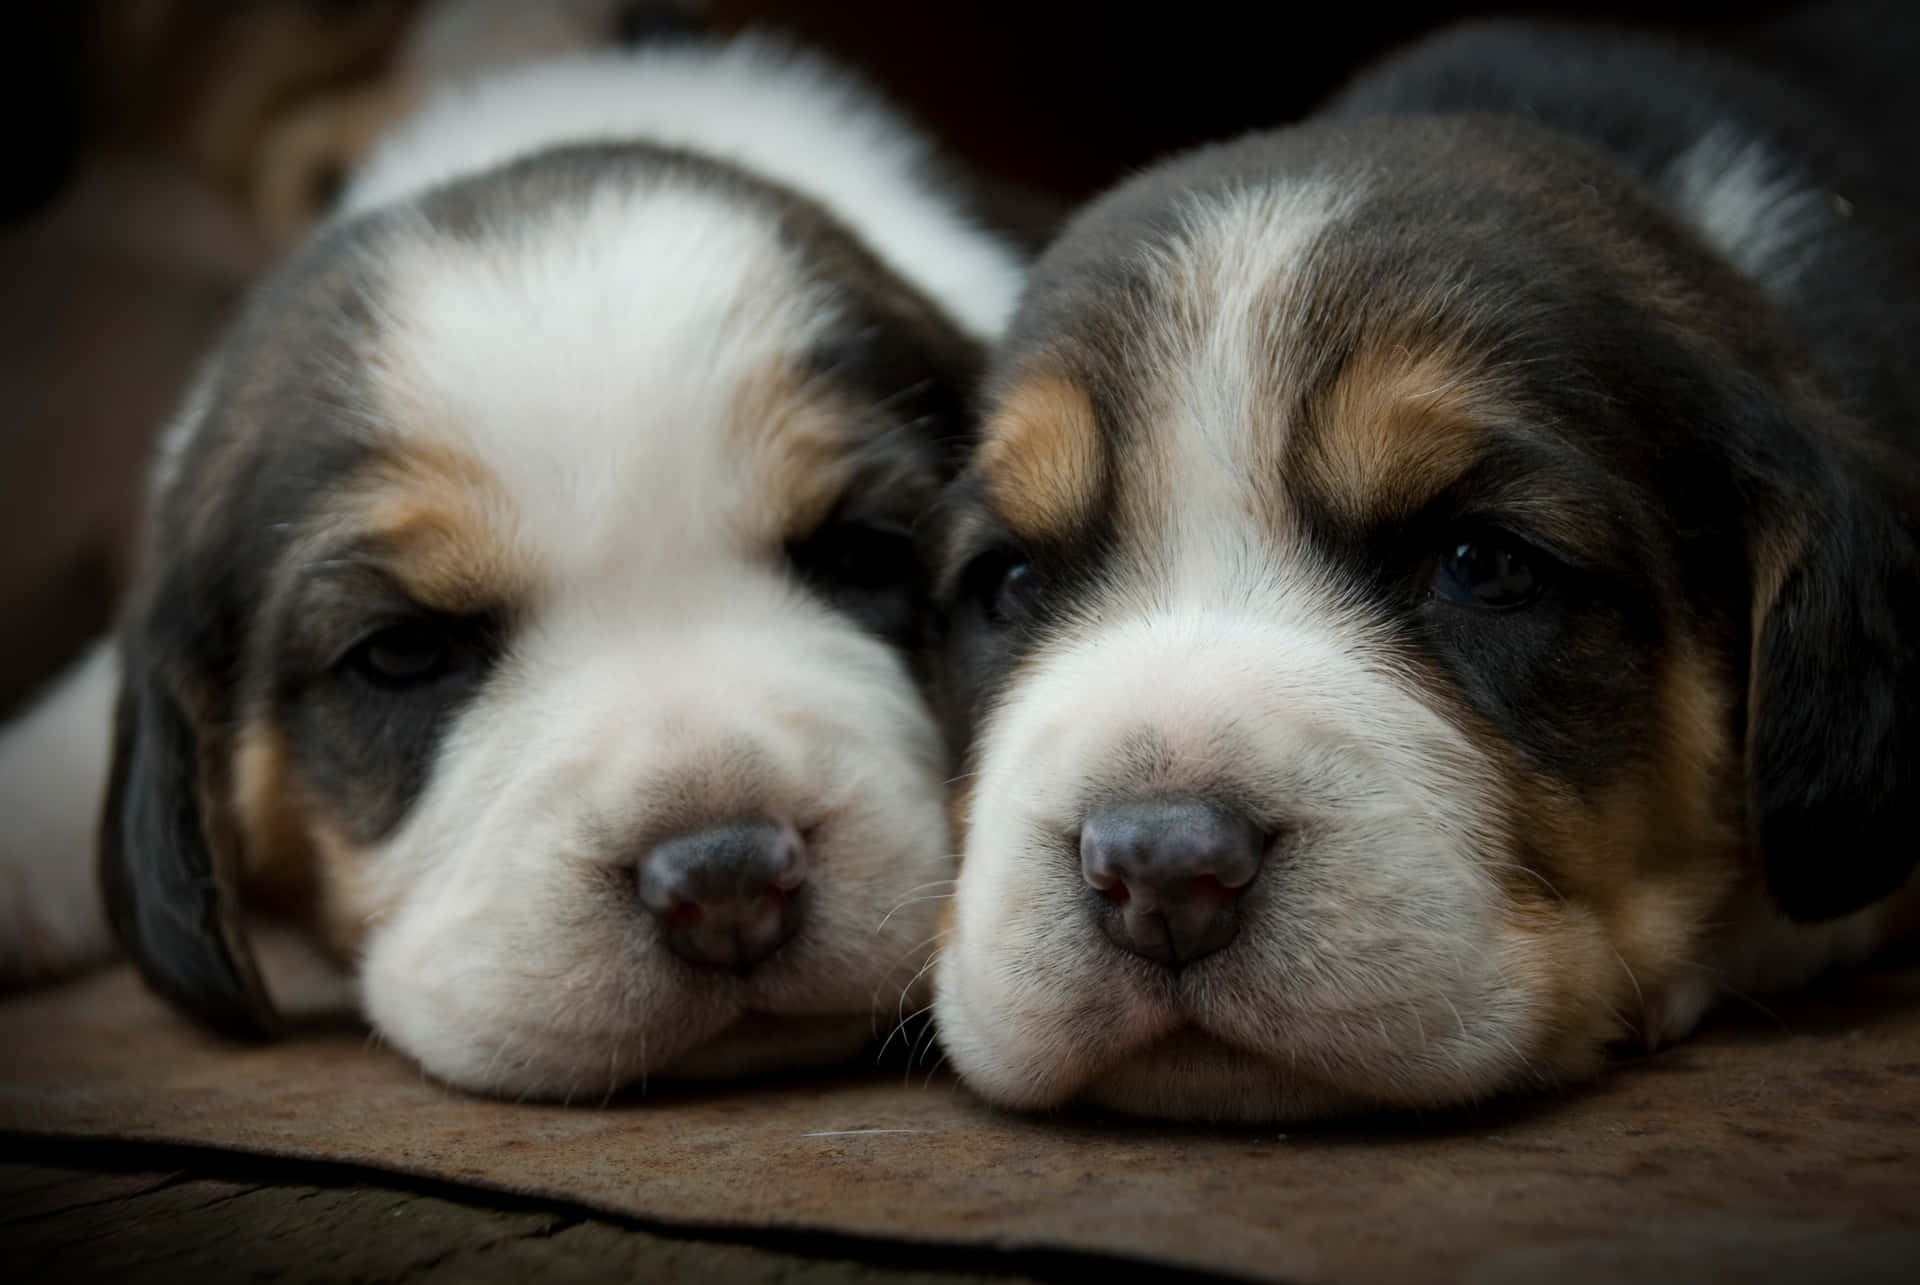 Amorde Cachorro: Estos Adorables Cachorros Seguramente Alegrarán Tu Día.